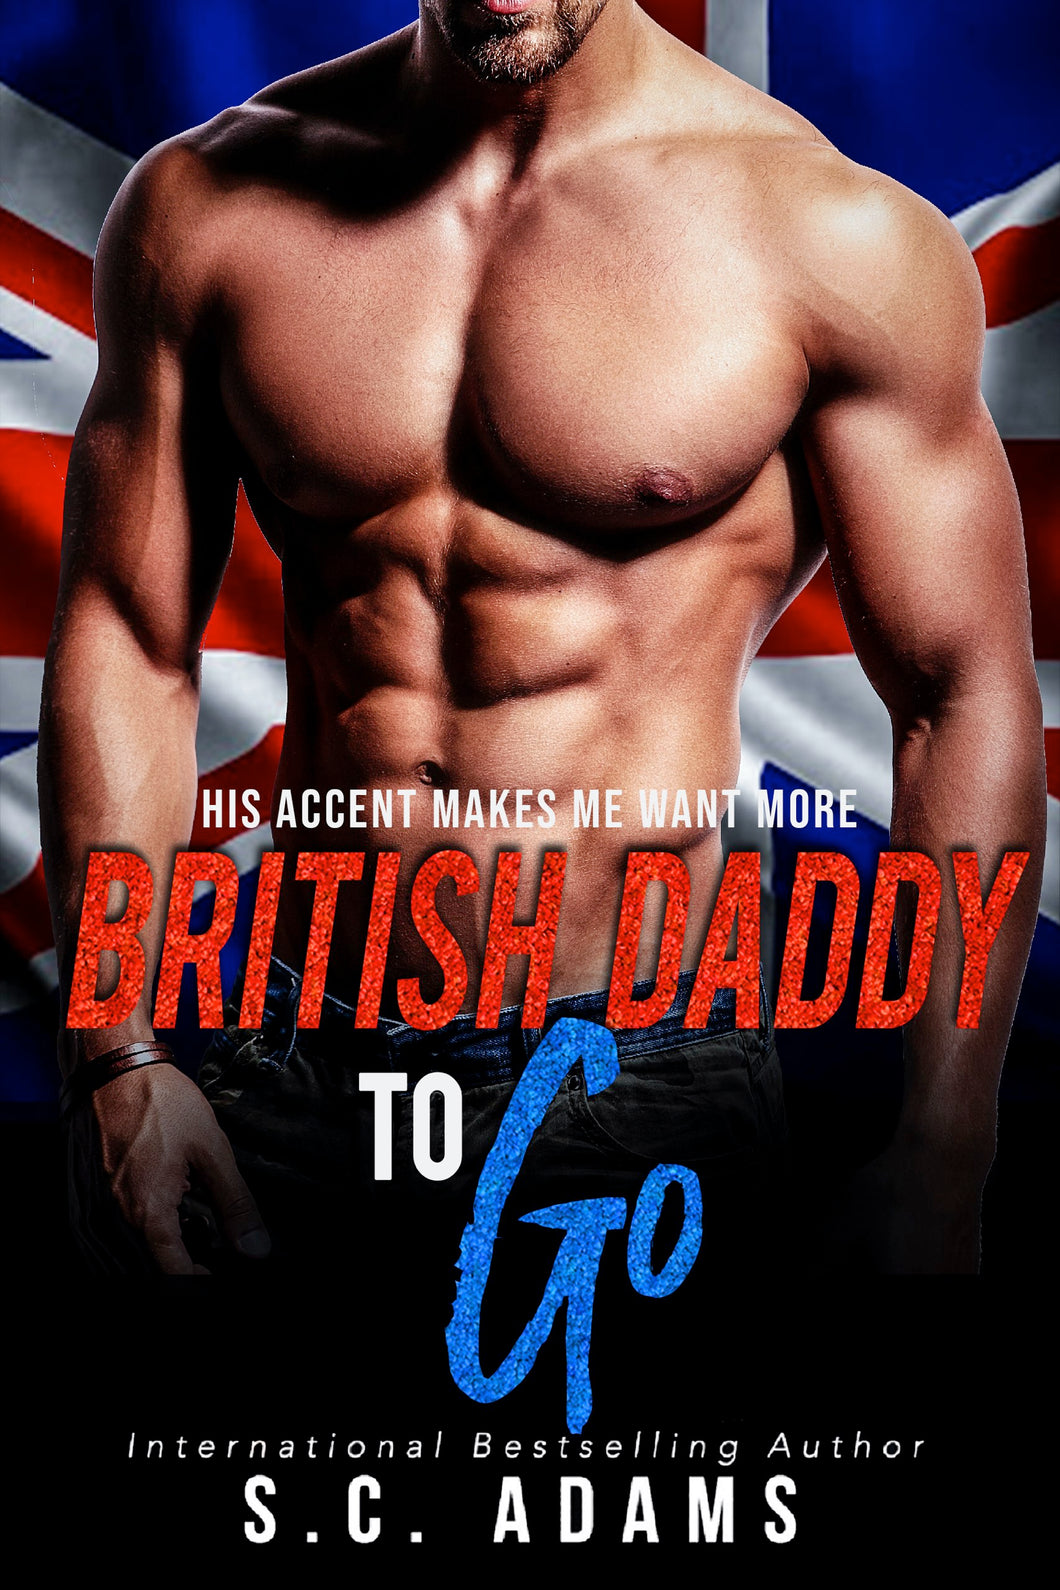 British Daddy To Go